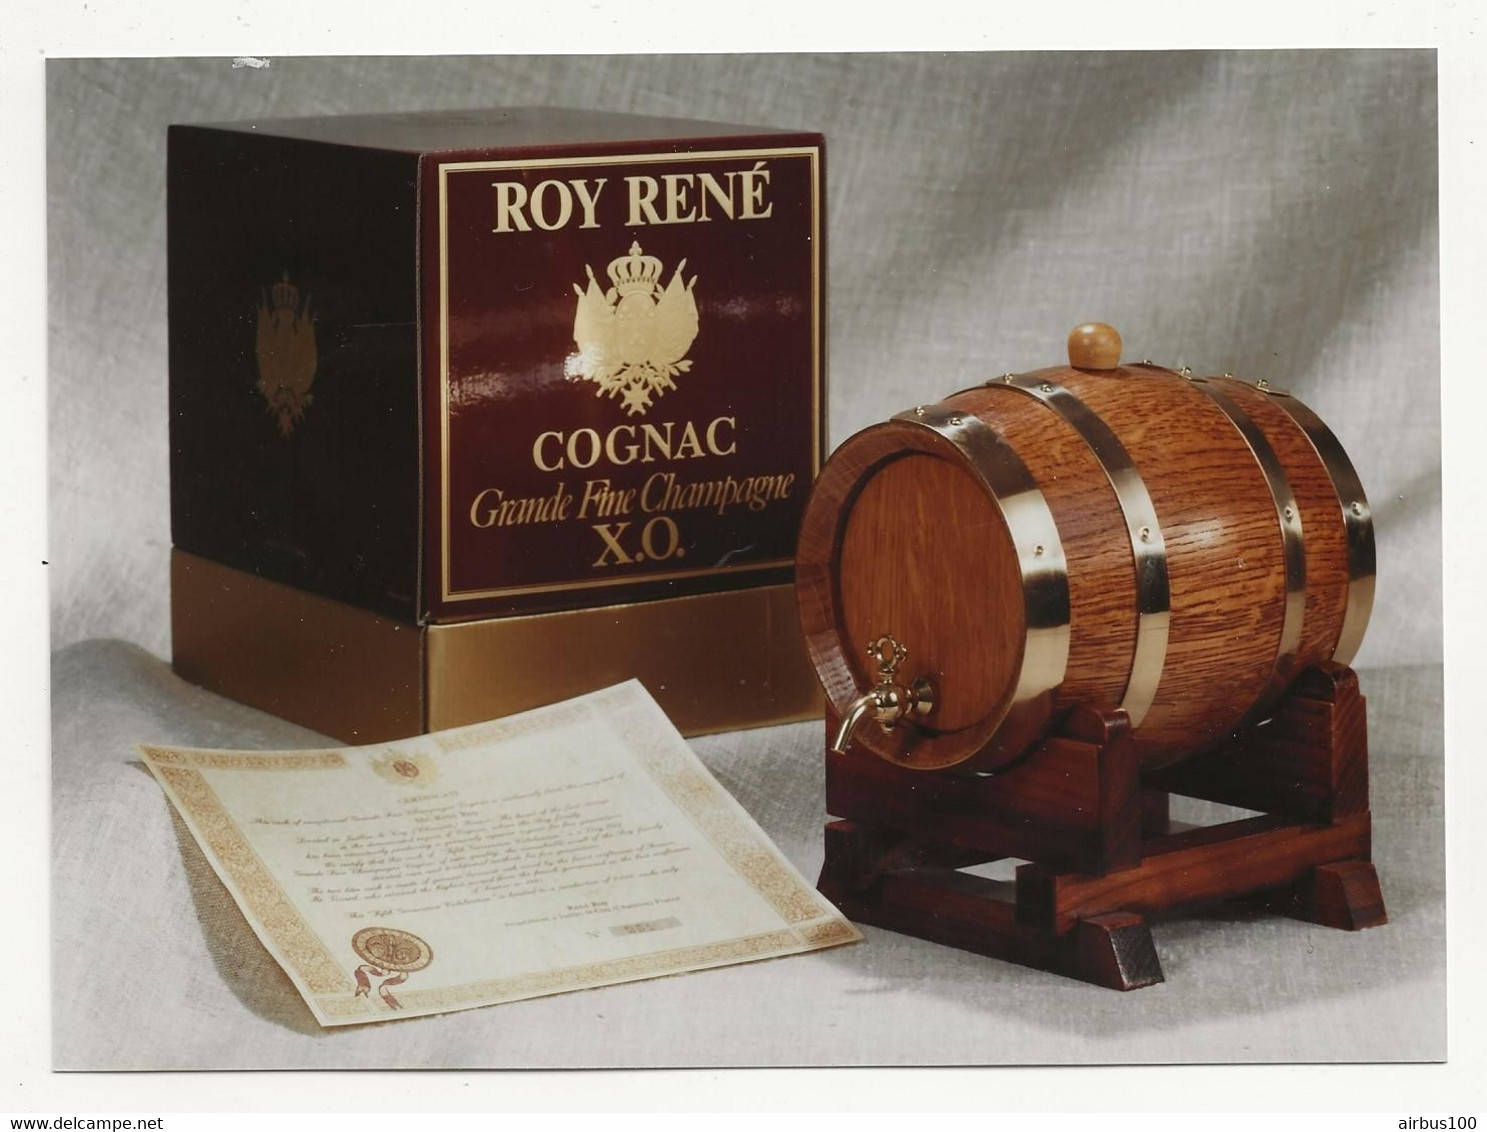 PHOTO ORIGINALE MARKETING 1980 - COGNAC RENÉ ROY JUILLAC LE COQ GRANDE FINE CHAMPAGNE X.O. - CHARENTE - Alcoolici